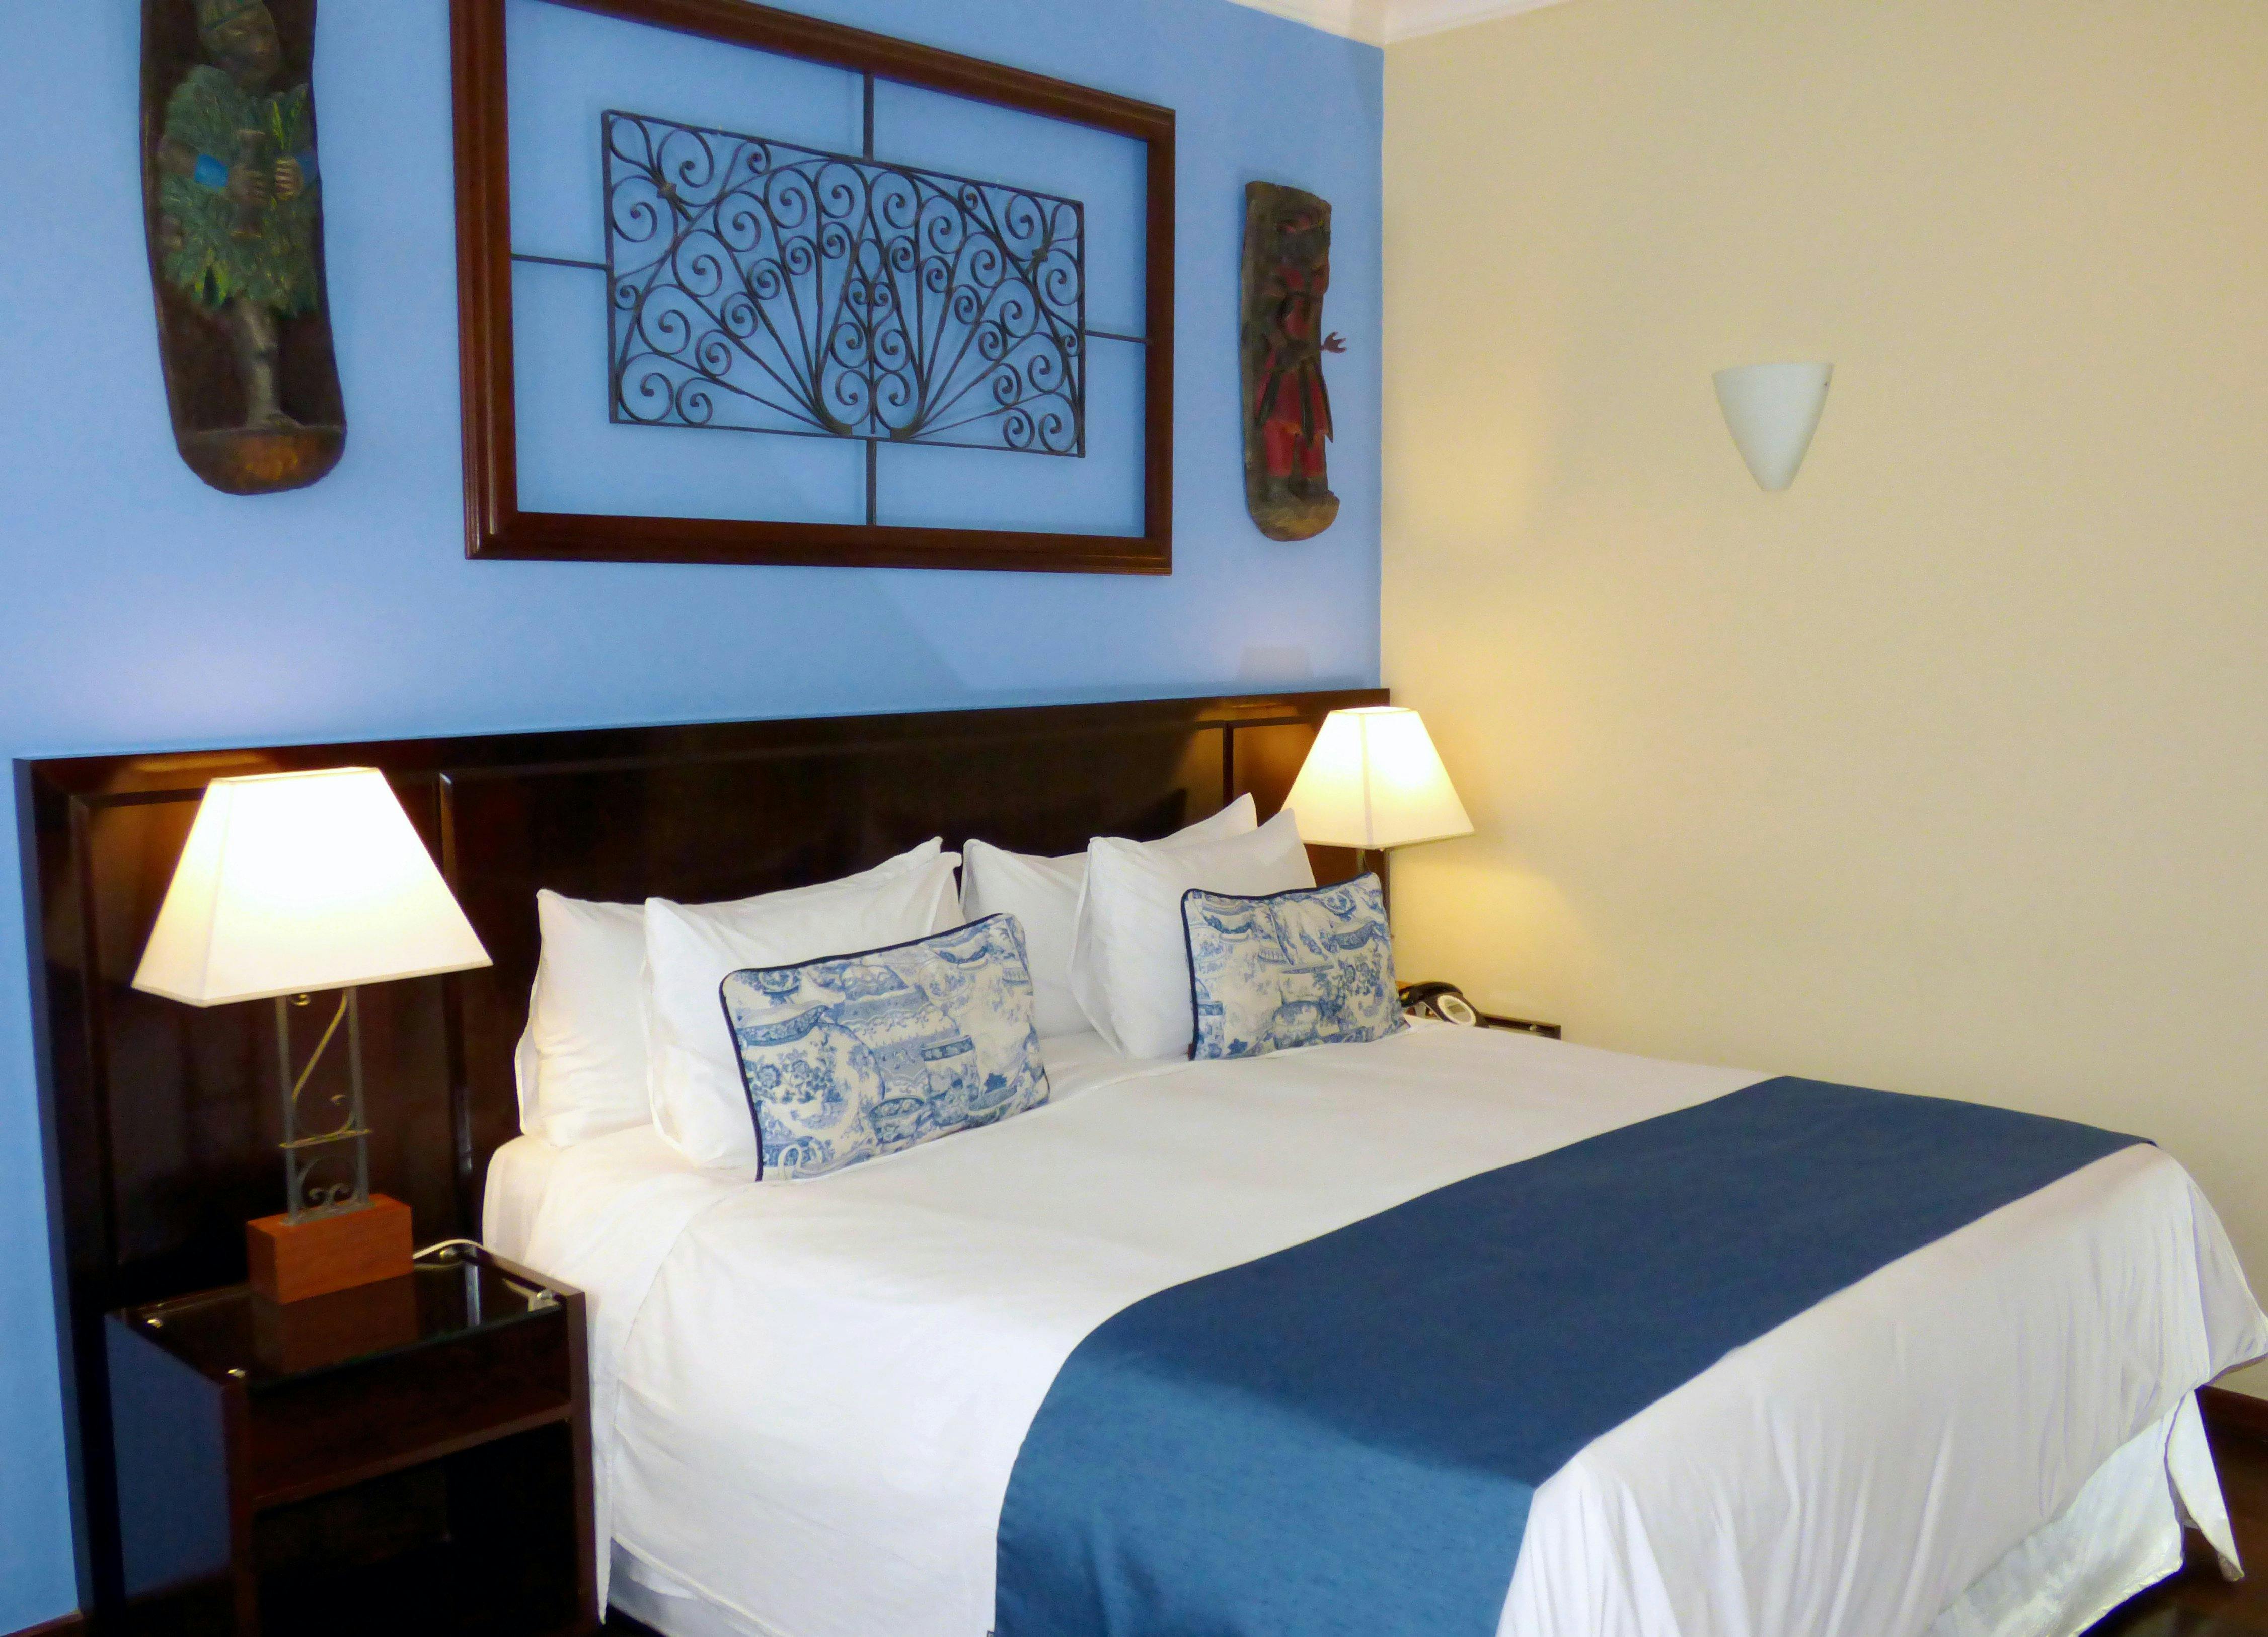 Hotel Casa Amarelindo Standard Room Bed Decoration